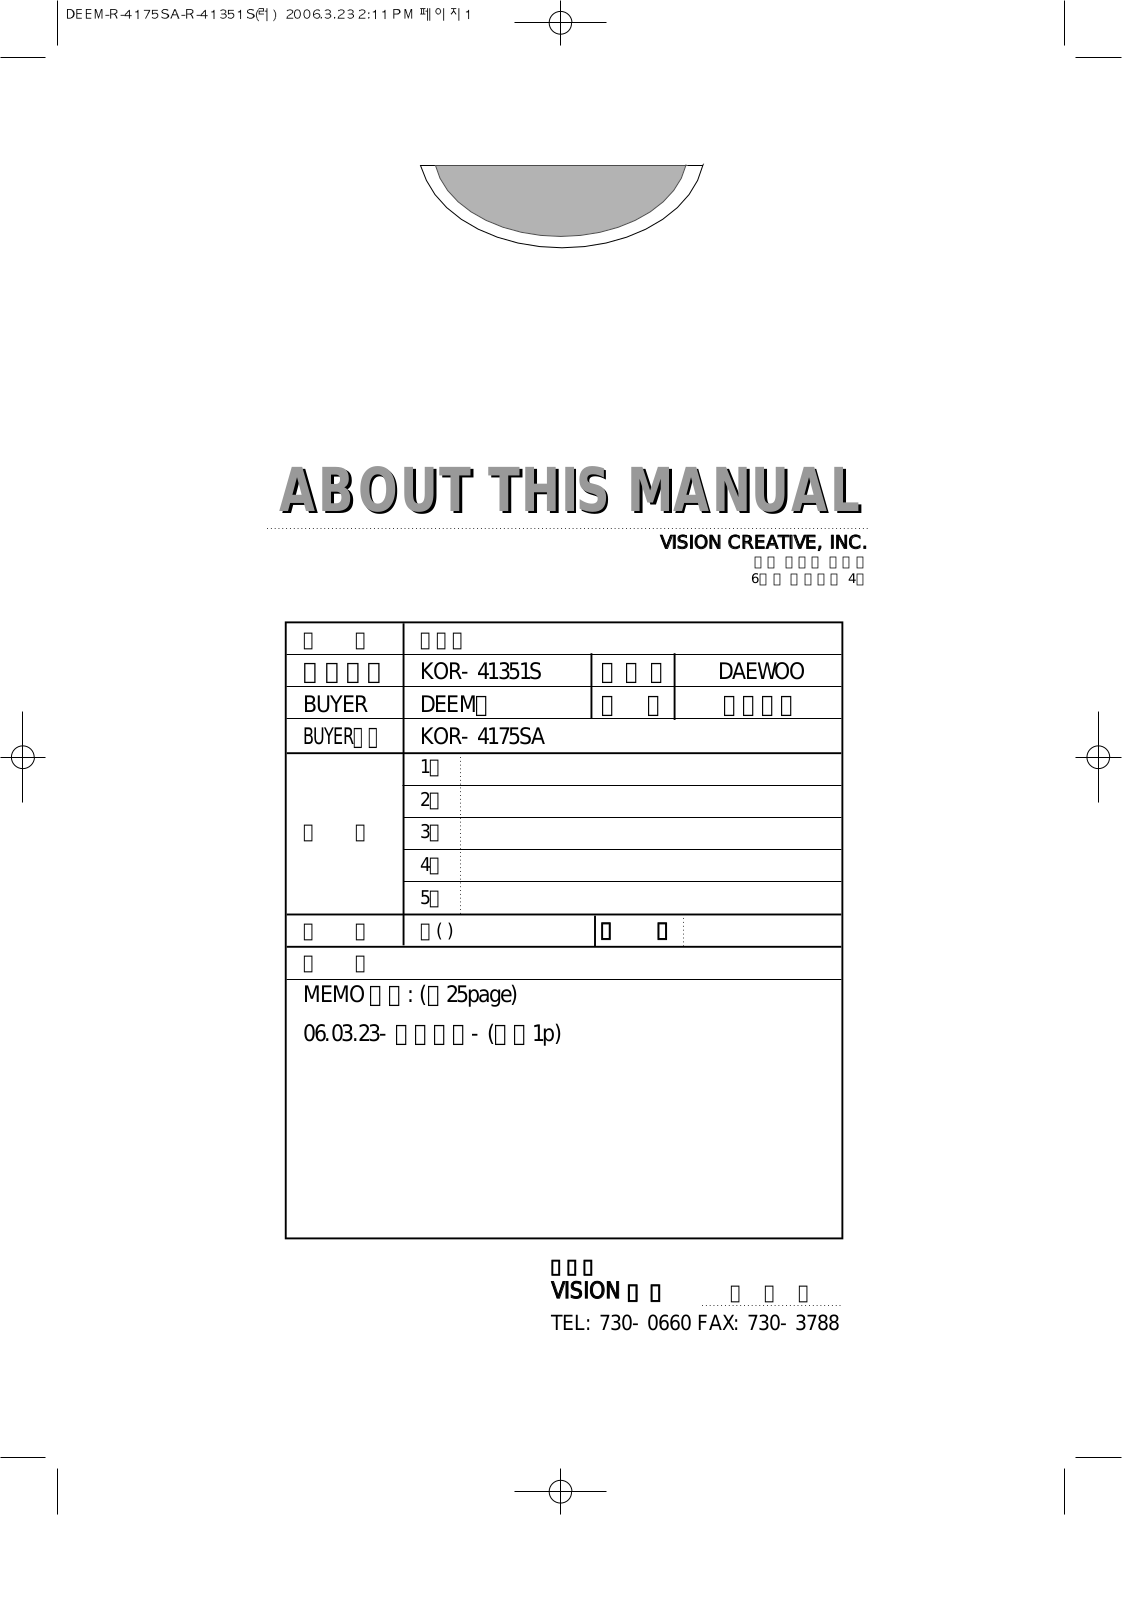 Daewoo KOR-4185A User Manual